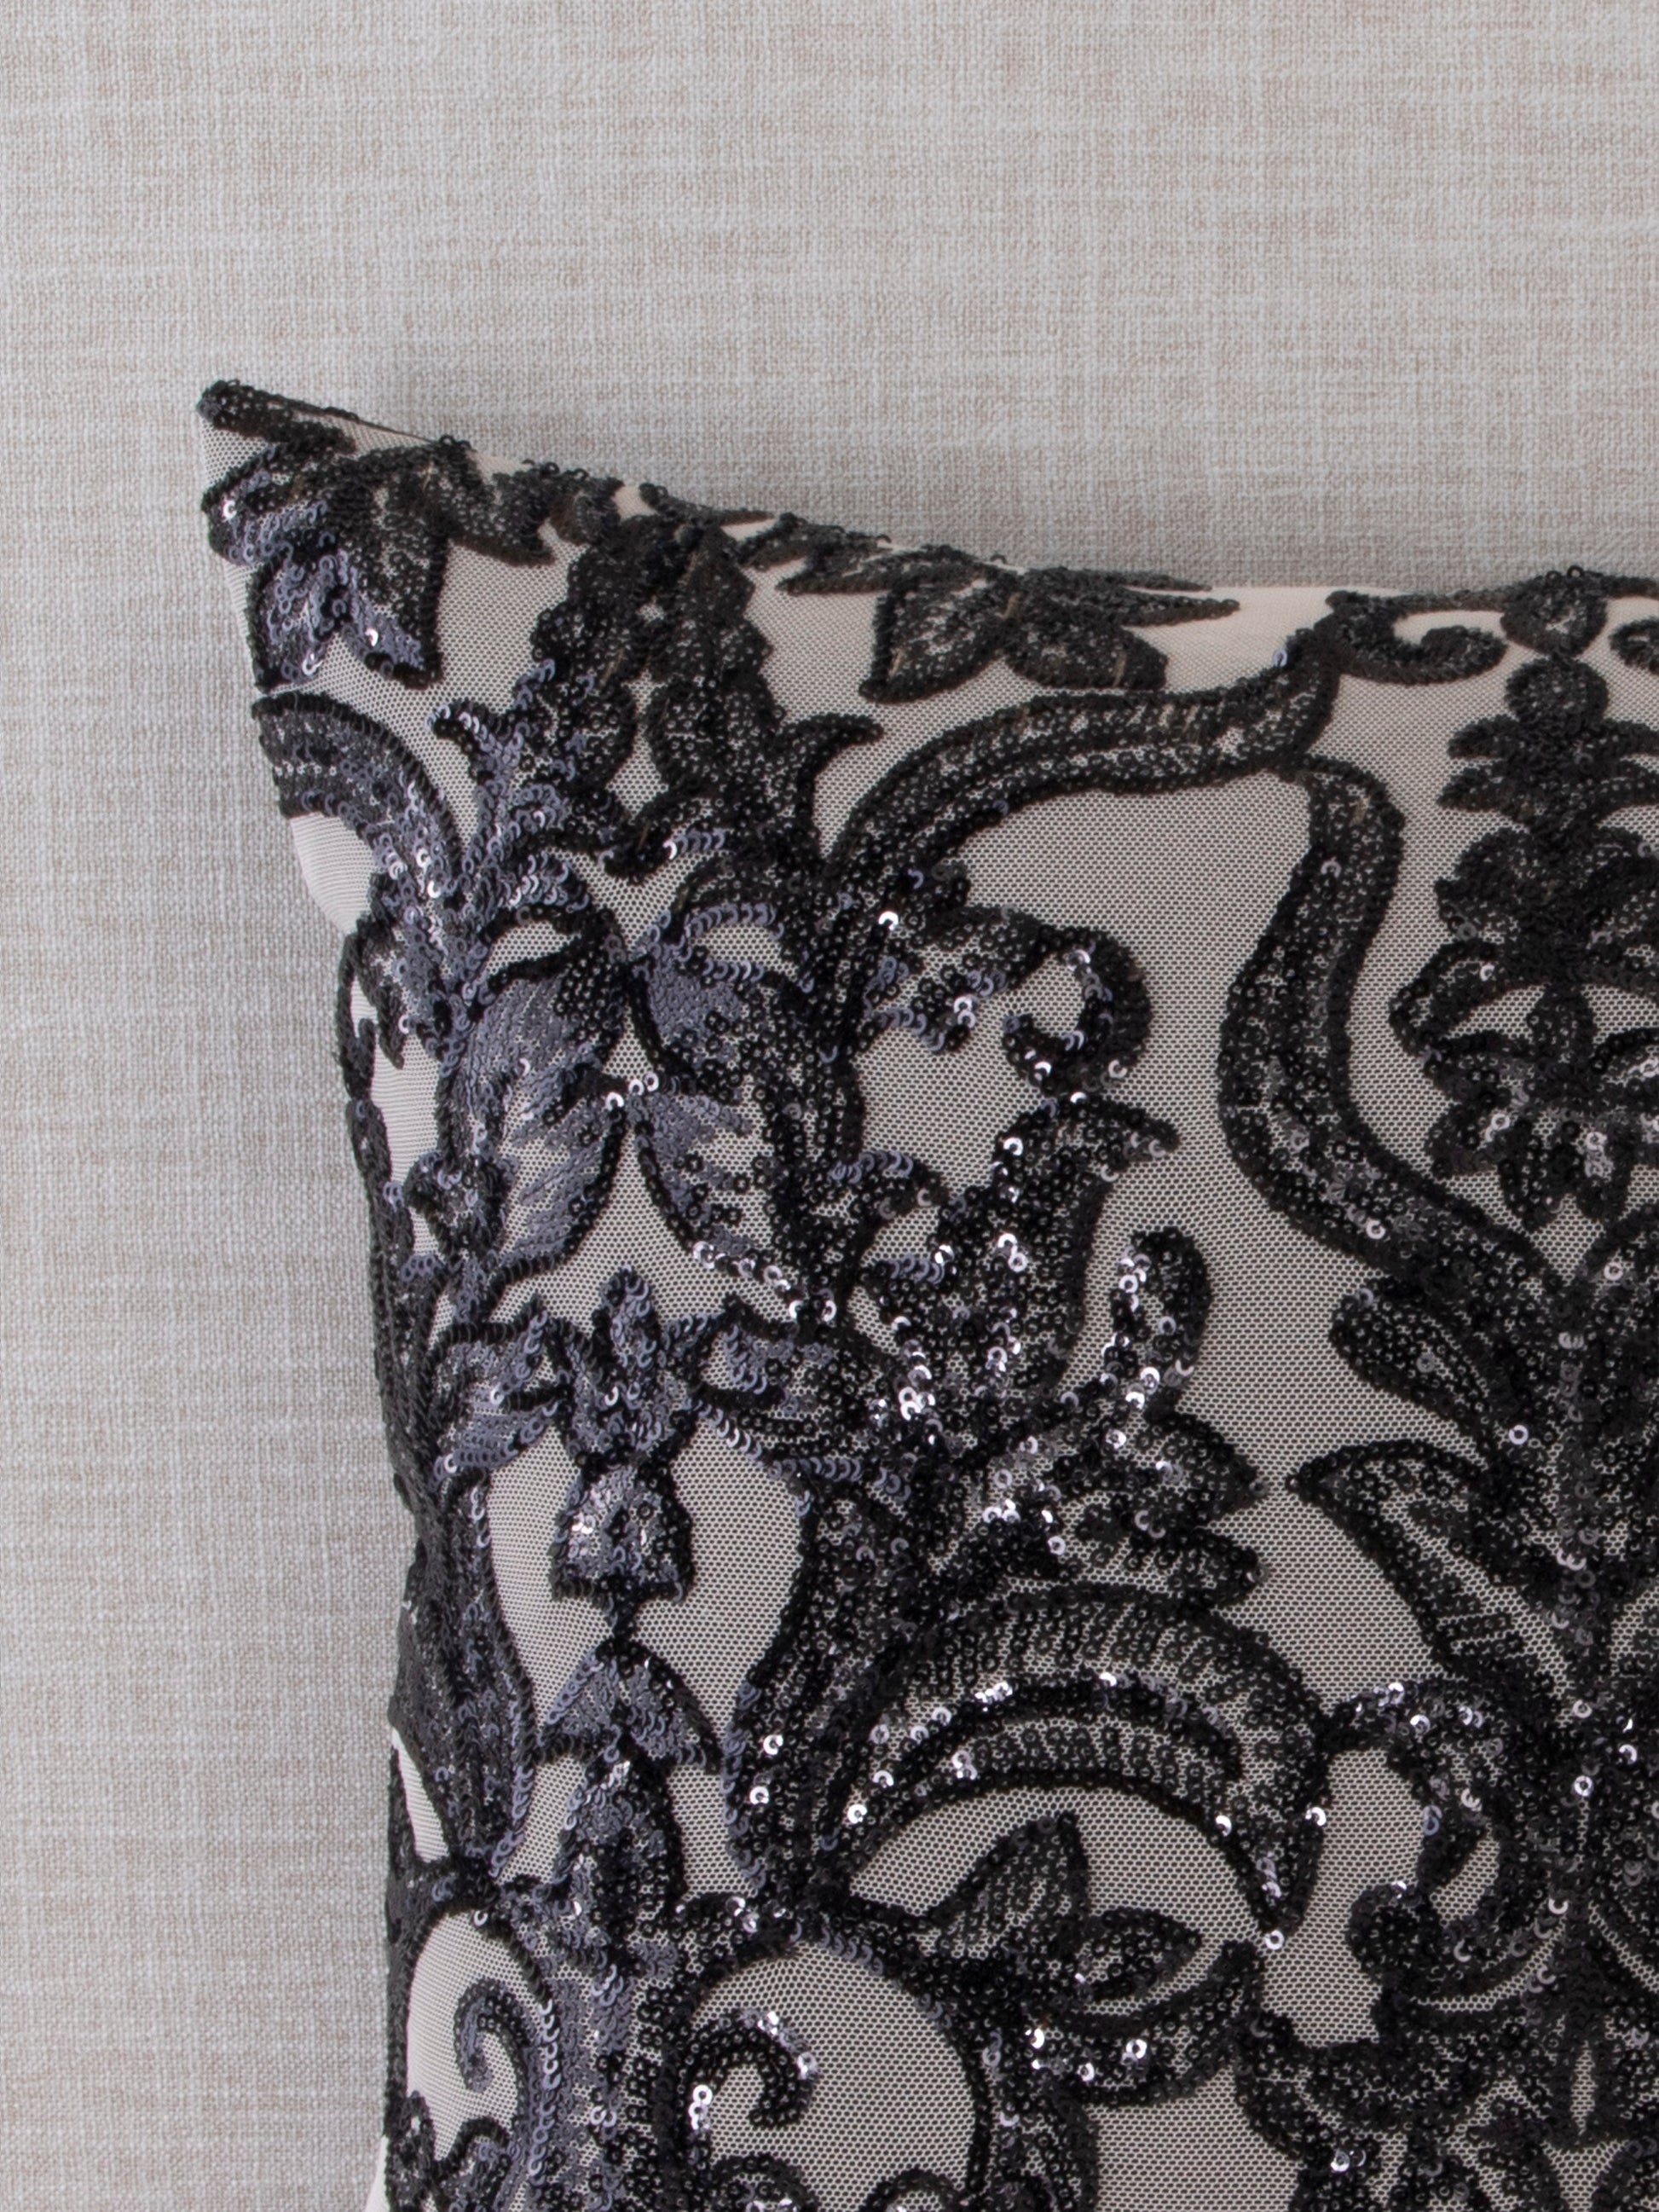 Black lace Ribbon. Throw Pillow by Monochrome Lace